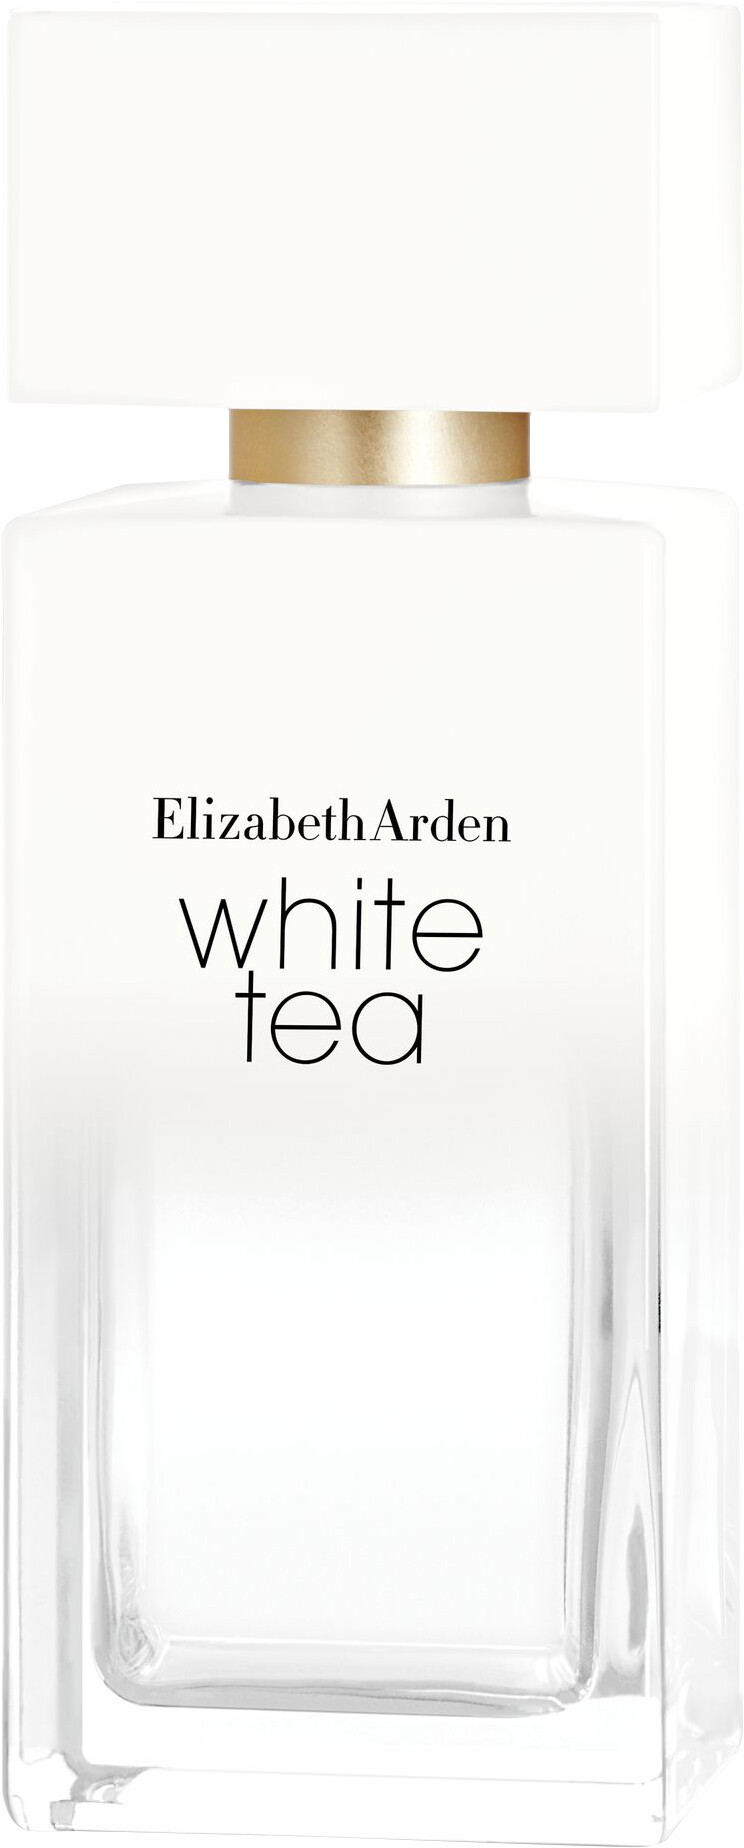 Elizabeth Arden White Tea Eau de Toilette Spray 50ml